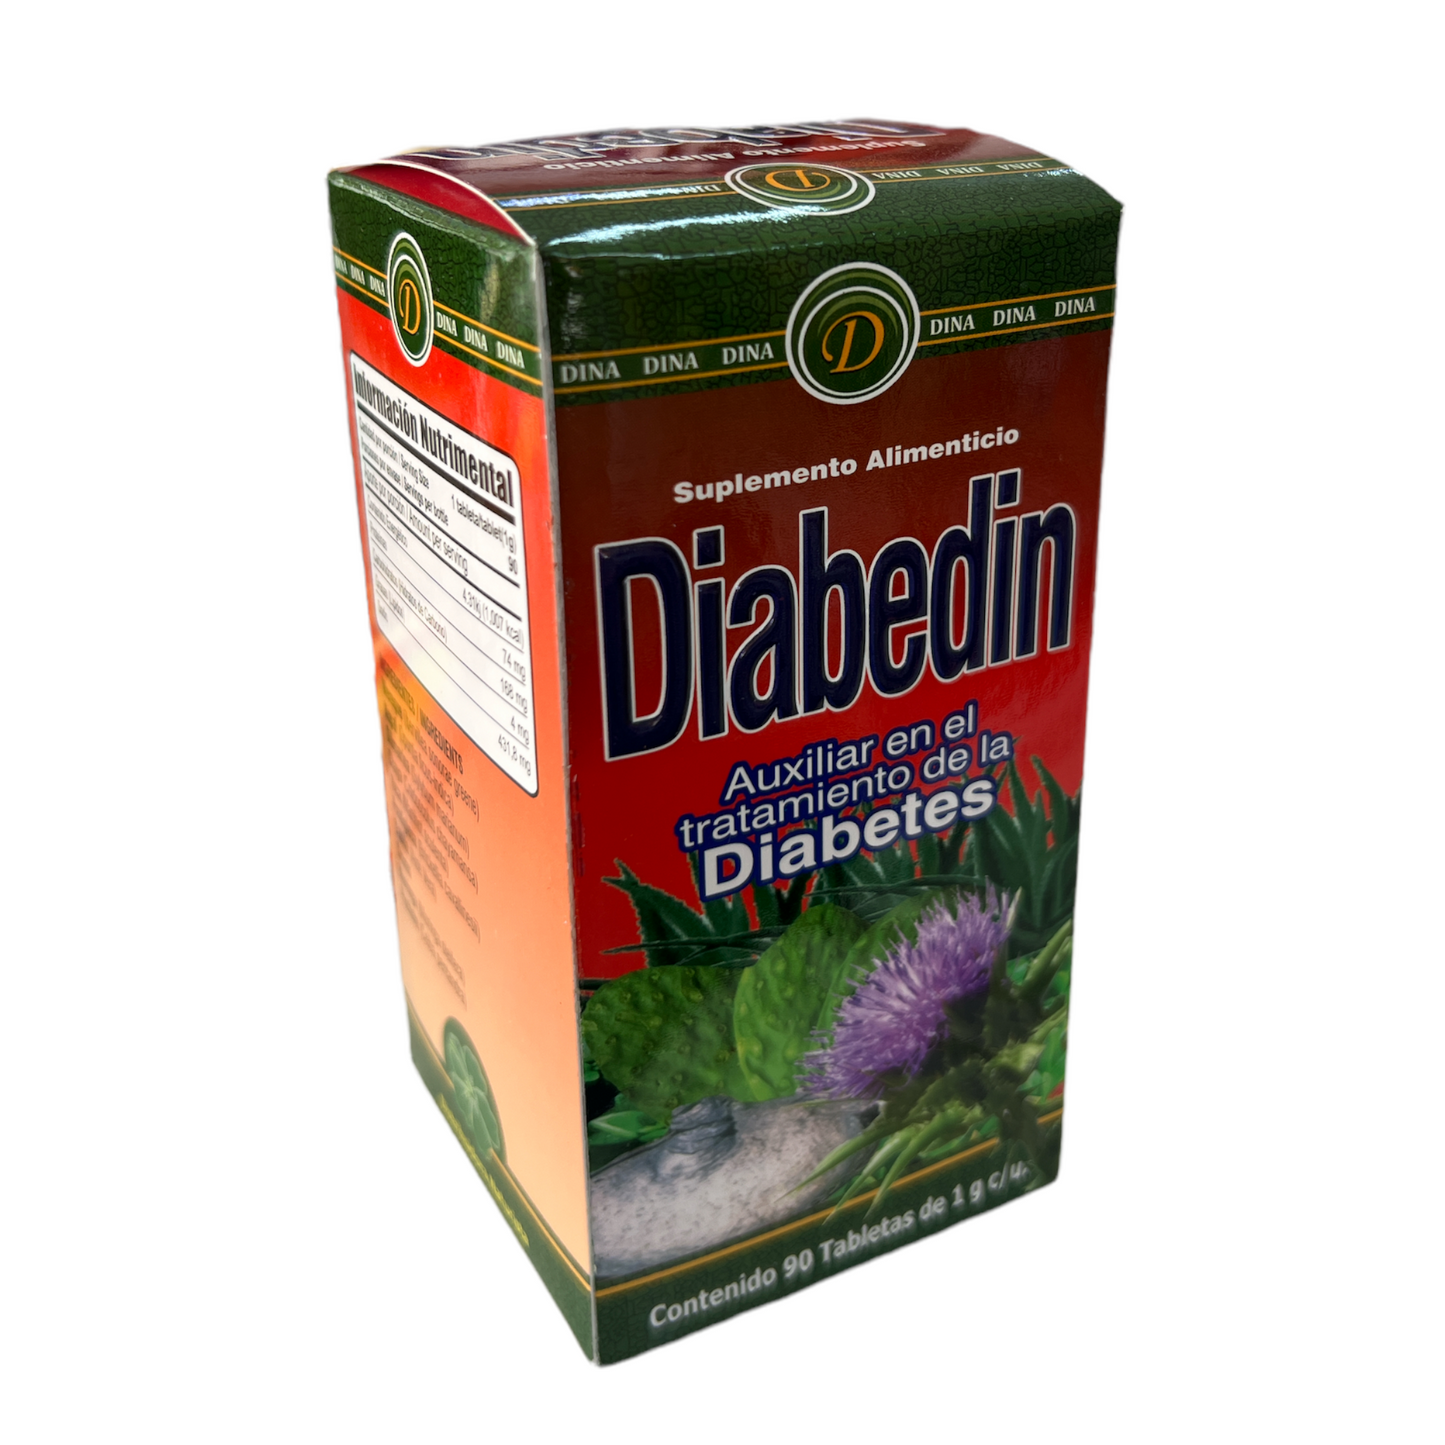 diabedin suplemento alimenticio 90 tabletas 1 g dina